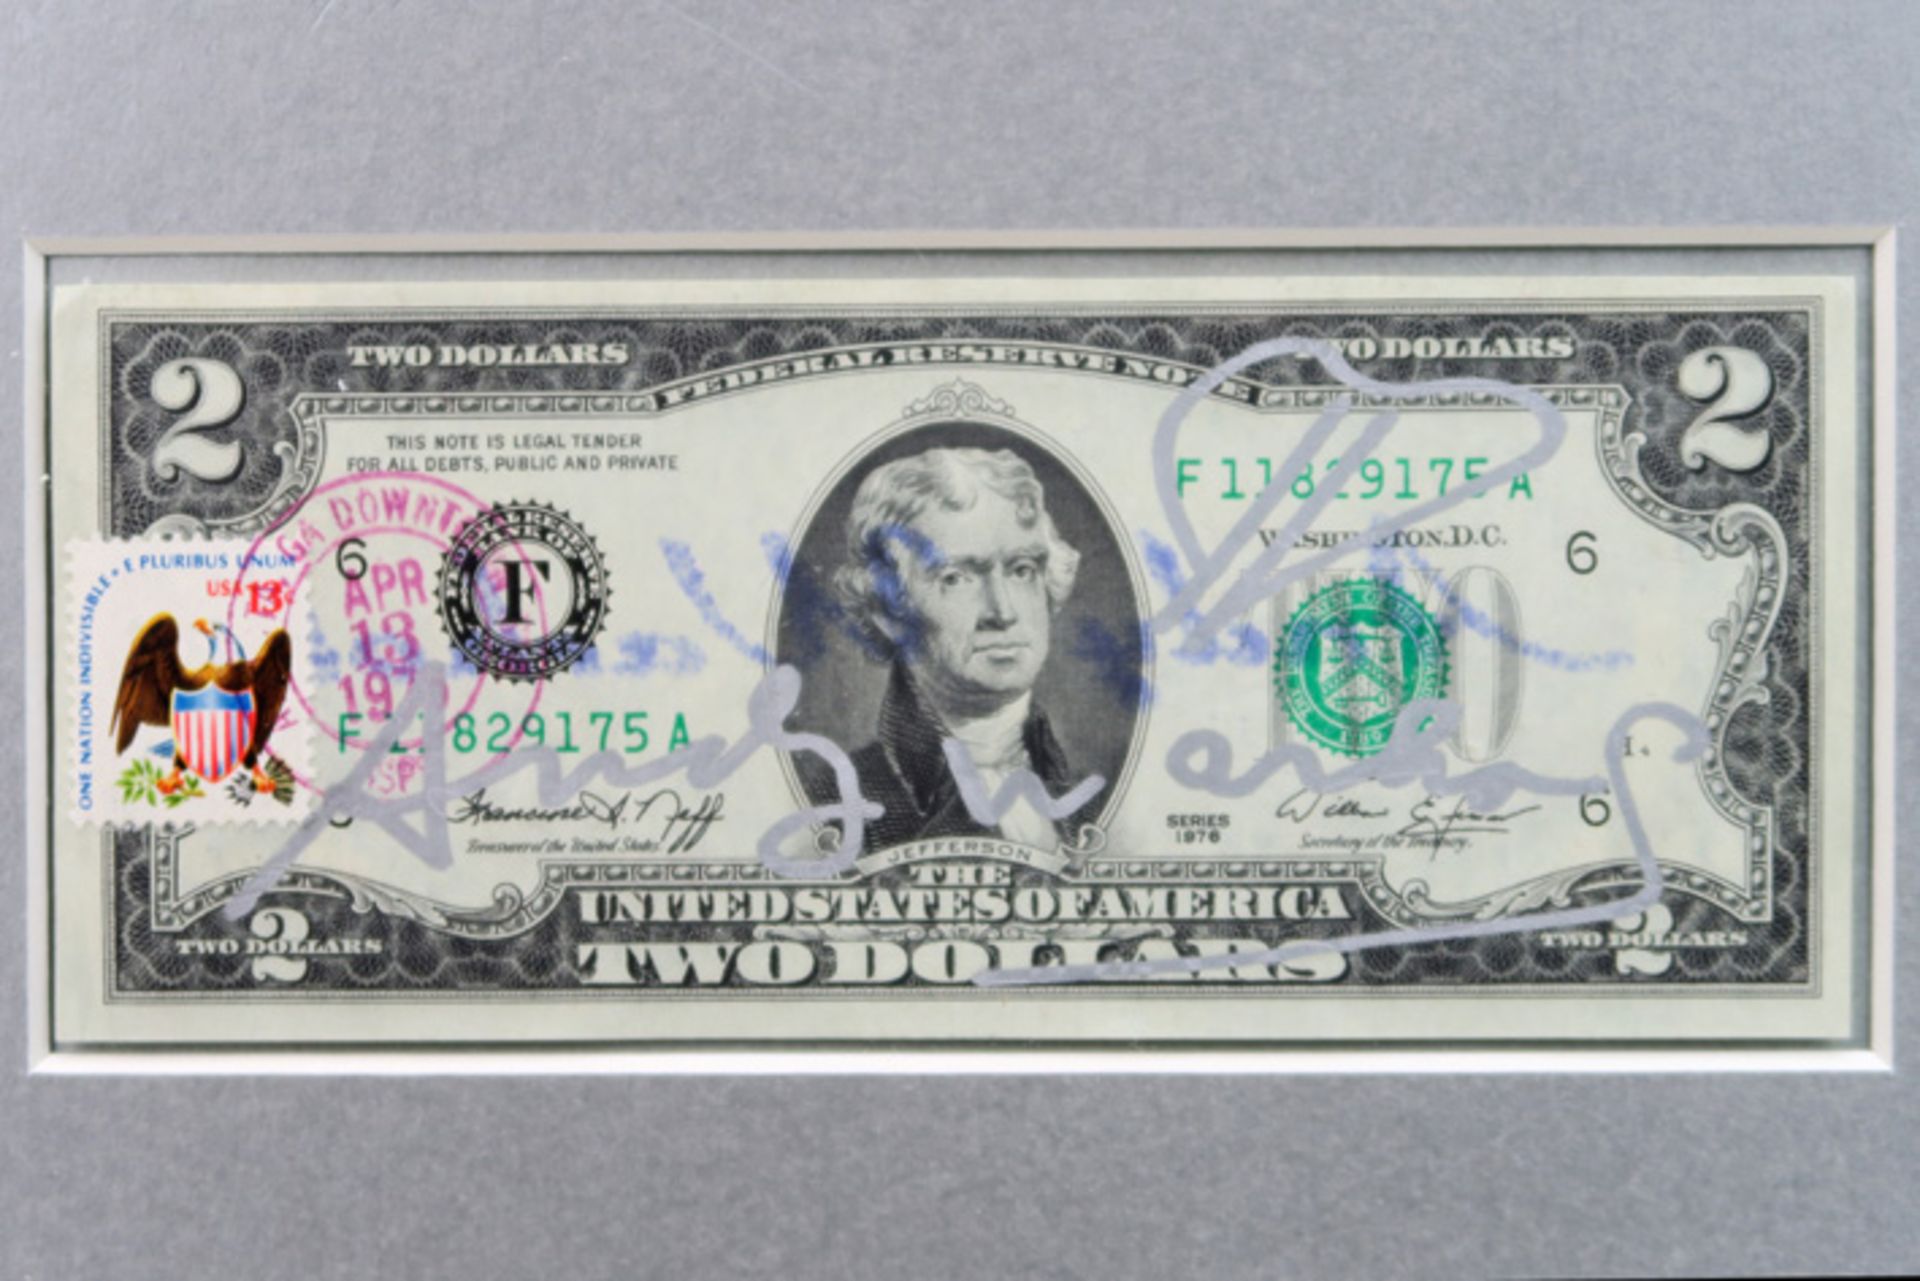 WARHOL ANDY (1930 - 1987) handgesigneerd twee dollar bankbiljet - ingekaderd||Andy Warhol handsigned